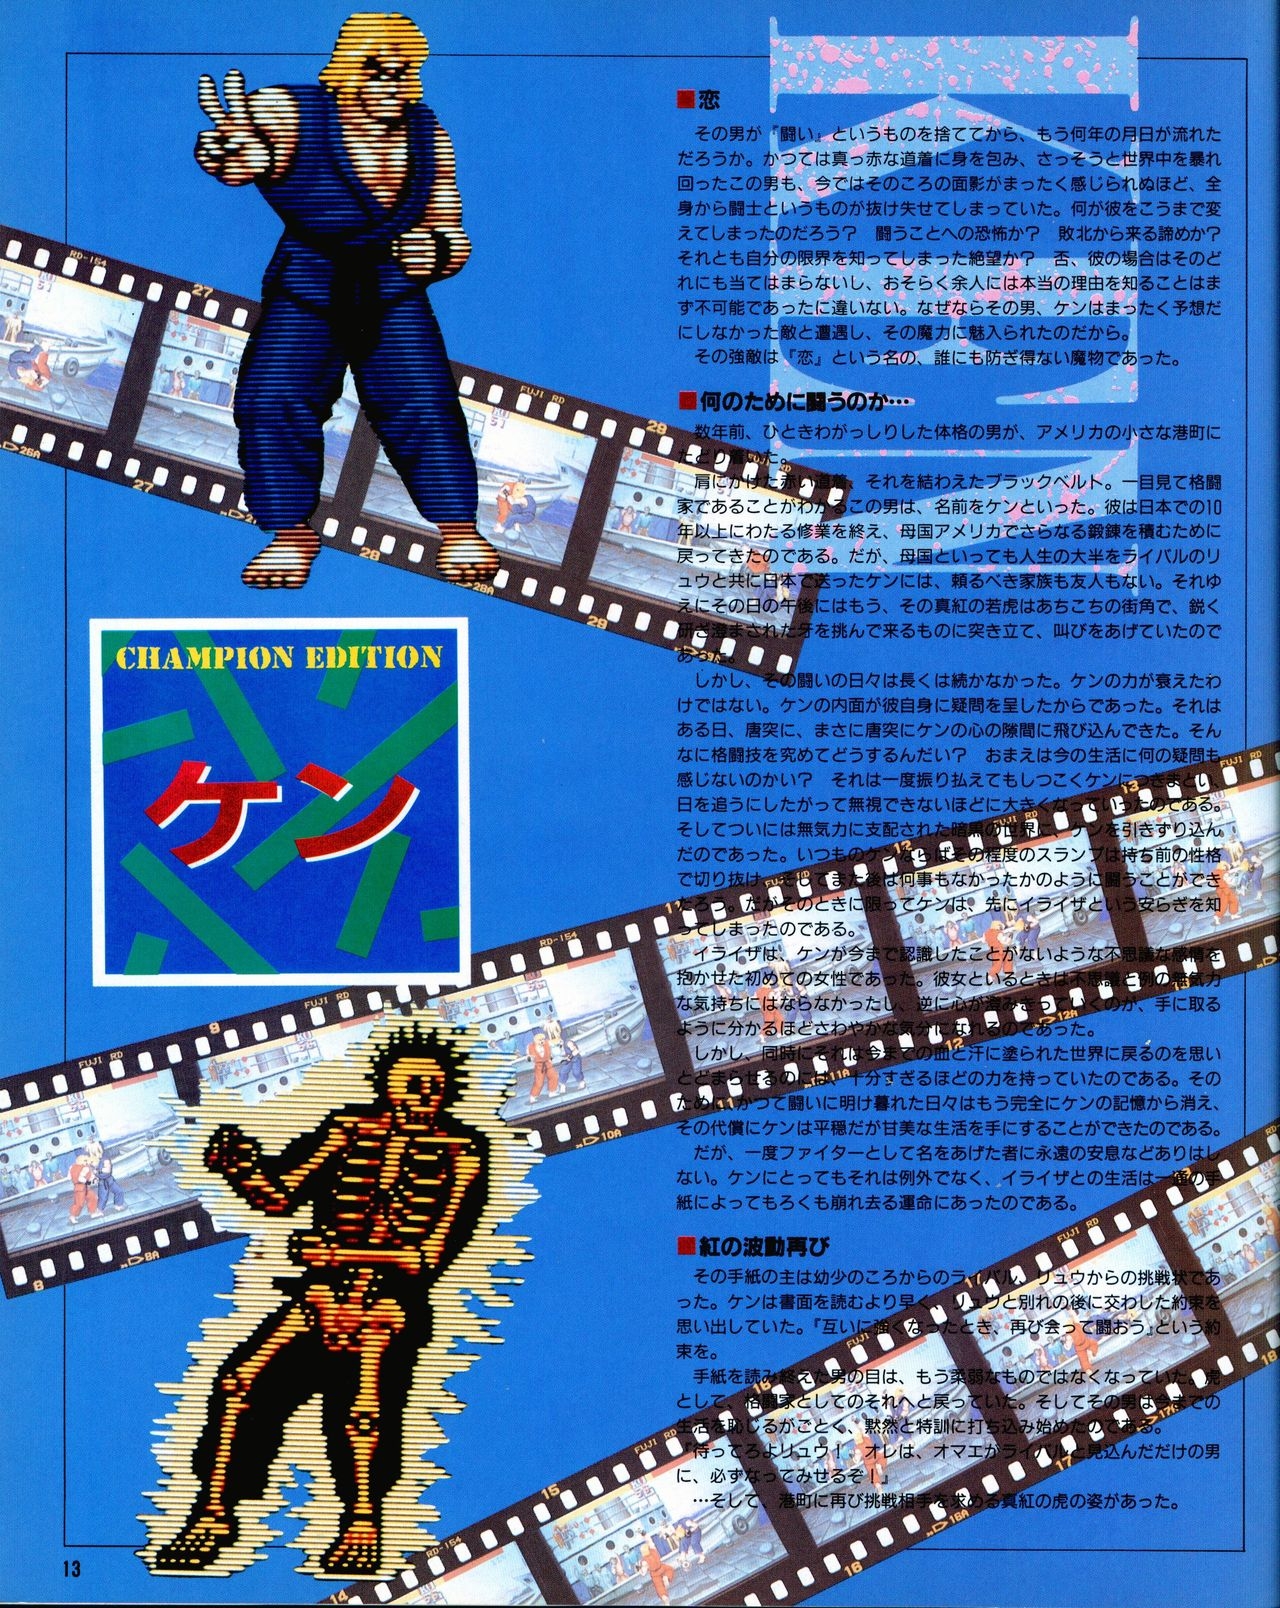 Street Fighter II Dash - Gamest special issue 77 14